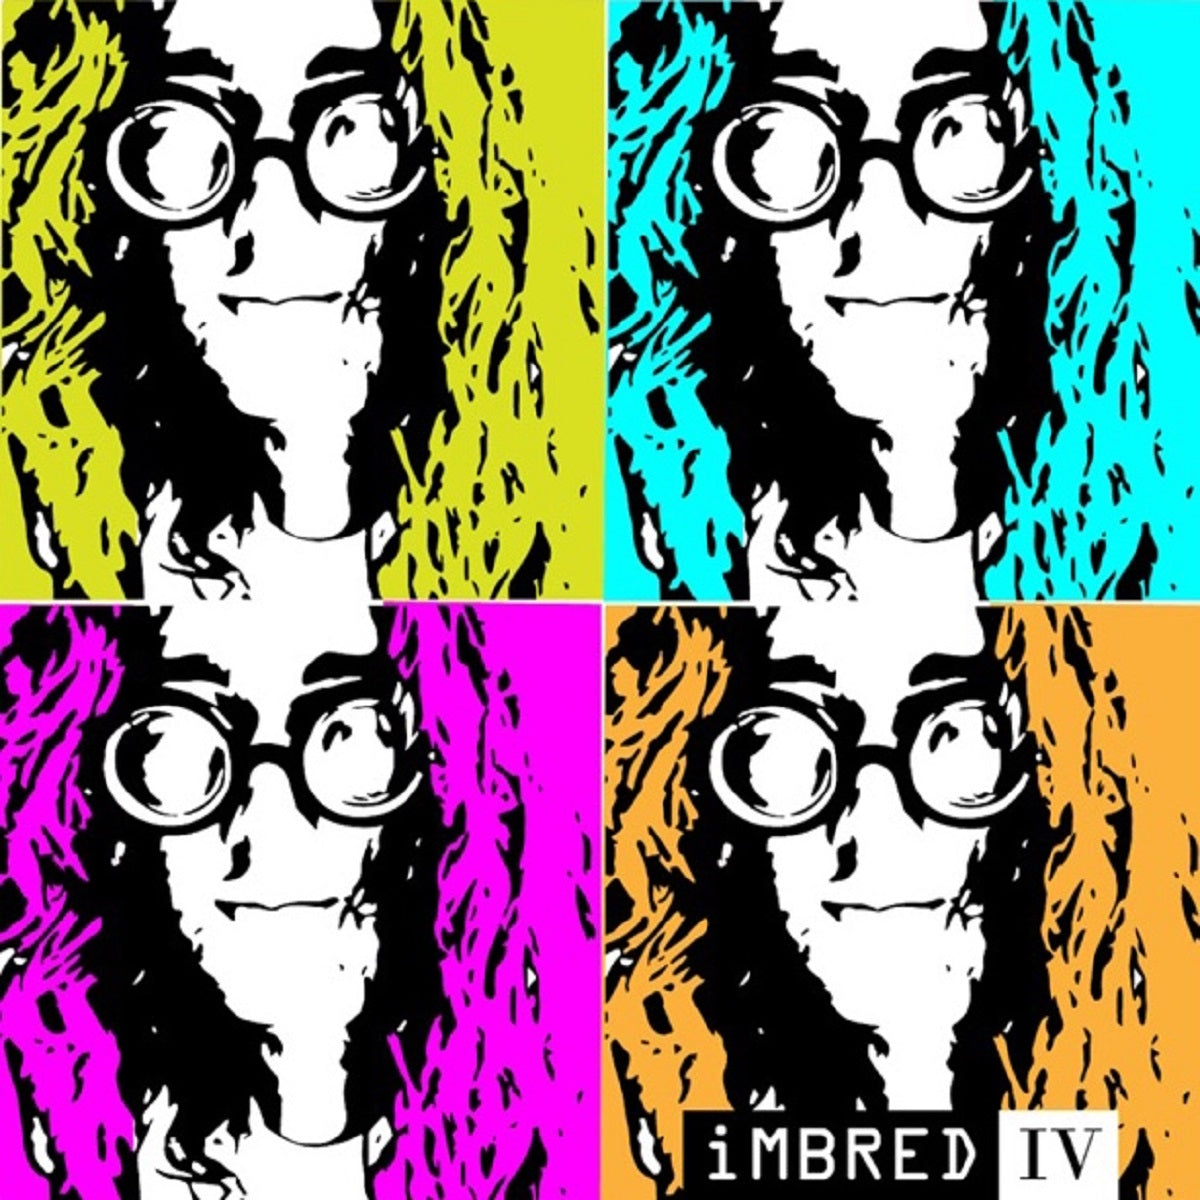 Imbred – ‘IV’